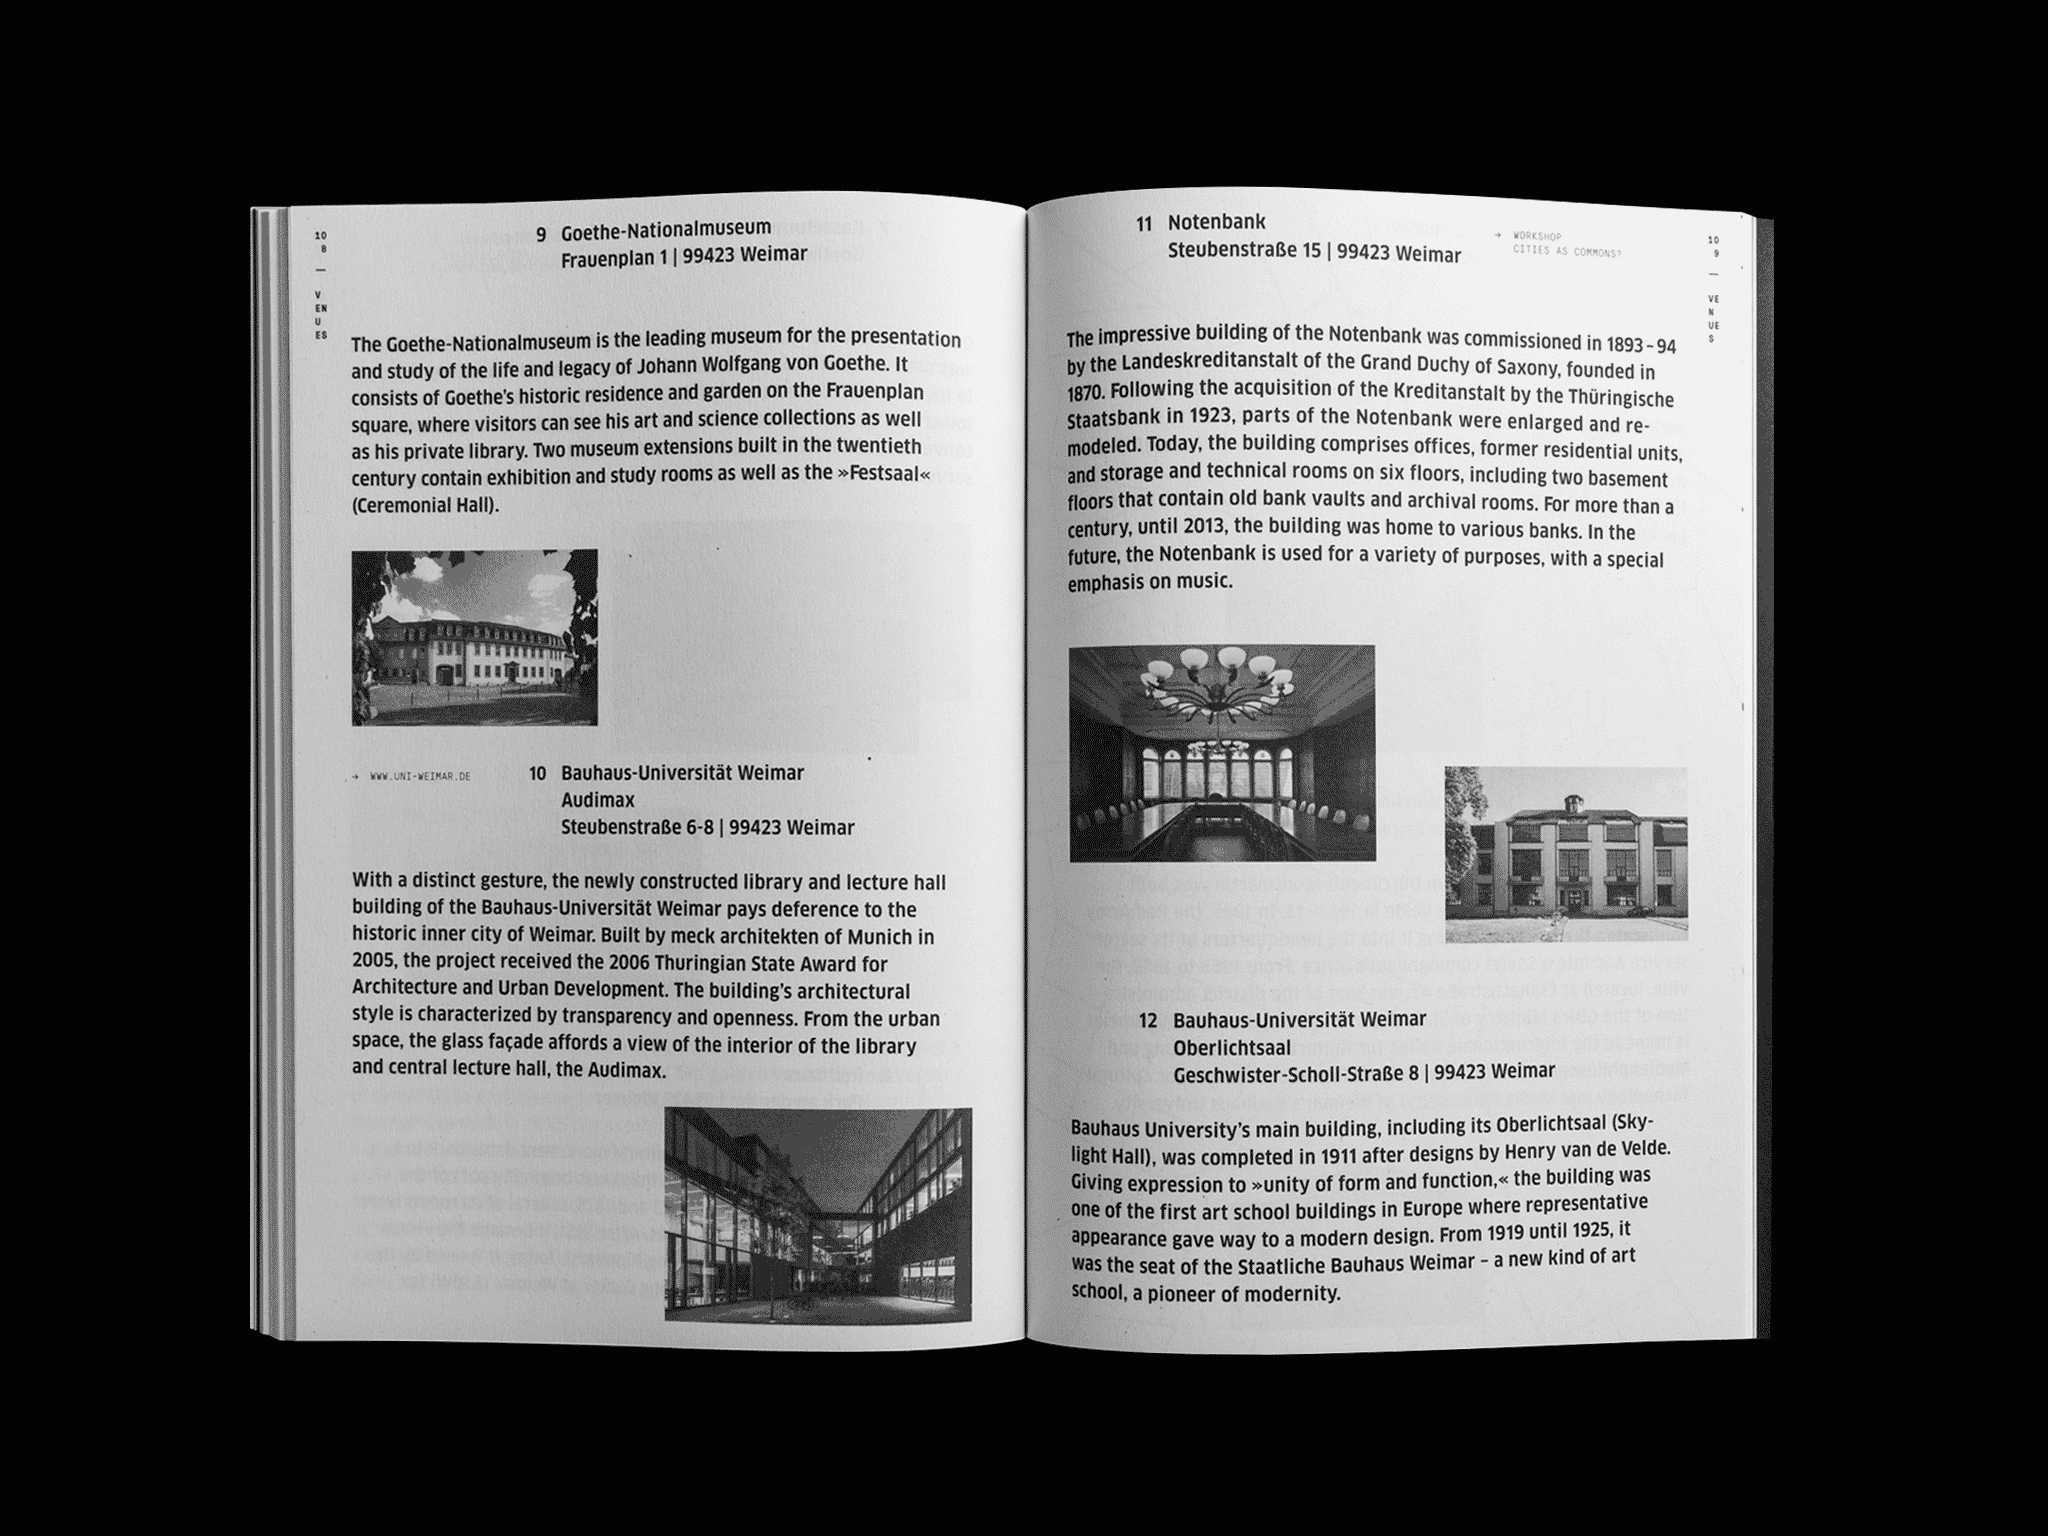 Doppelseite Katalog mit architektonischen Fotografien / Double page catalog with architectural photographs